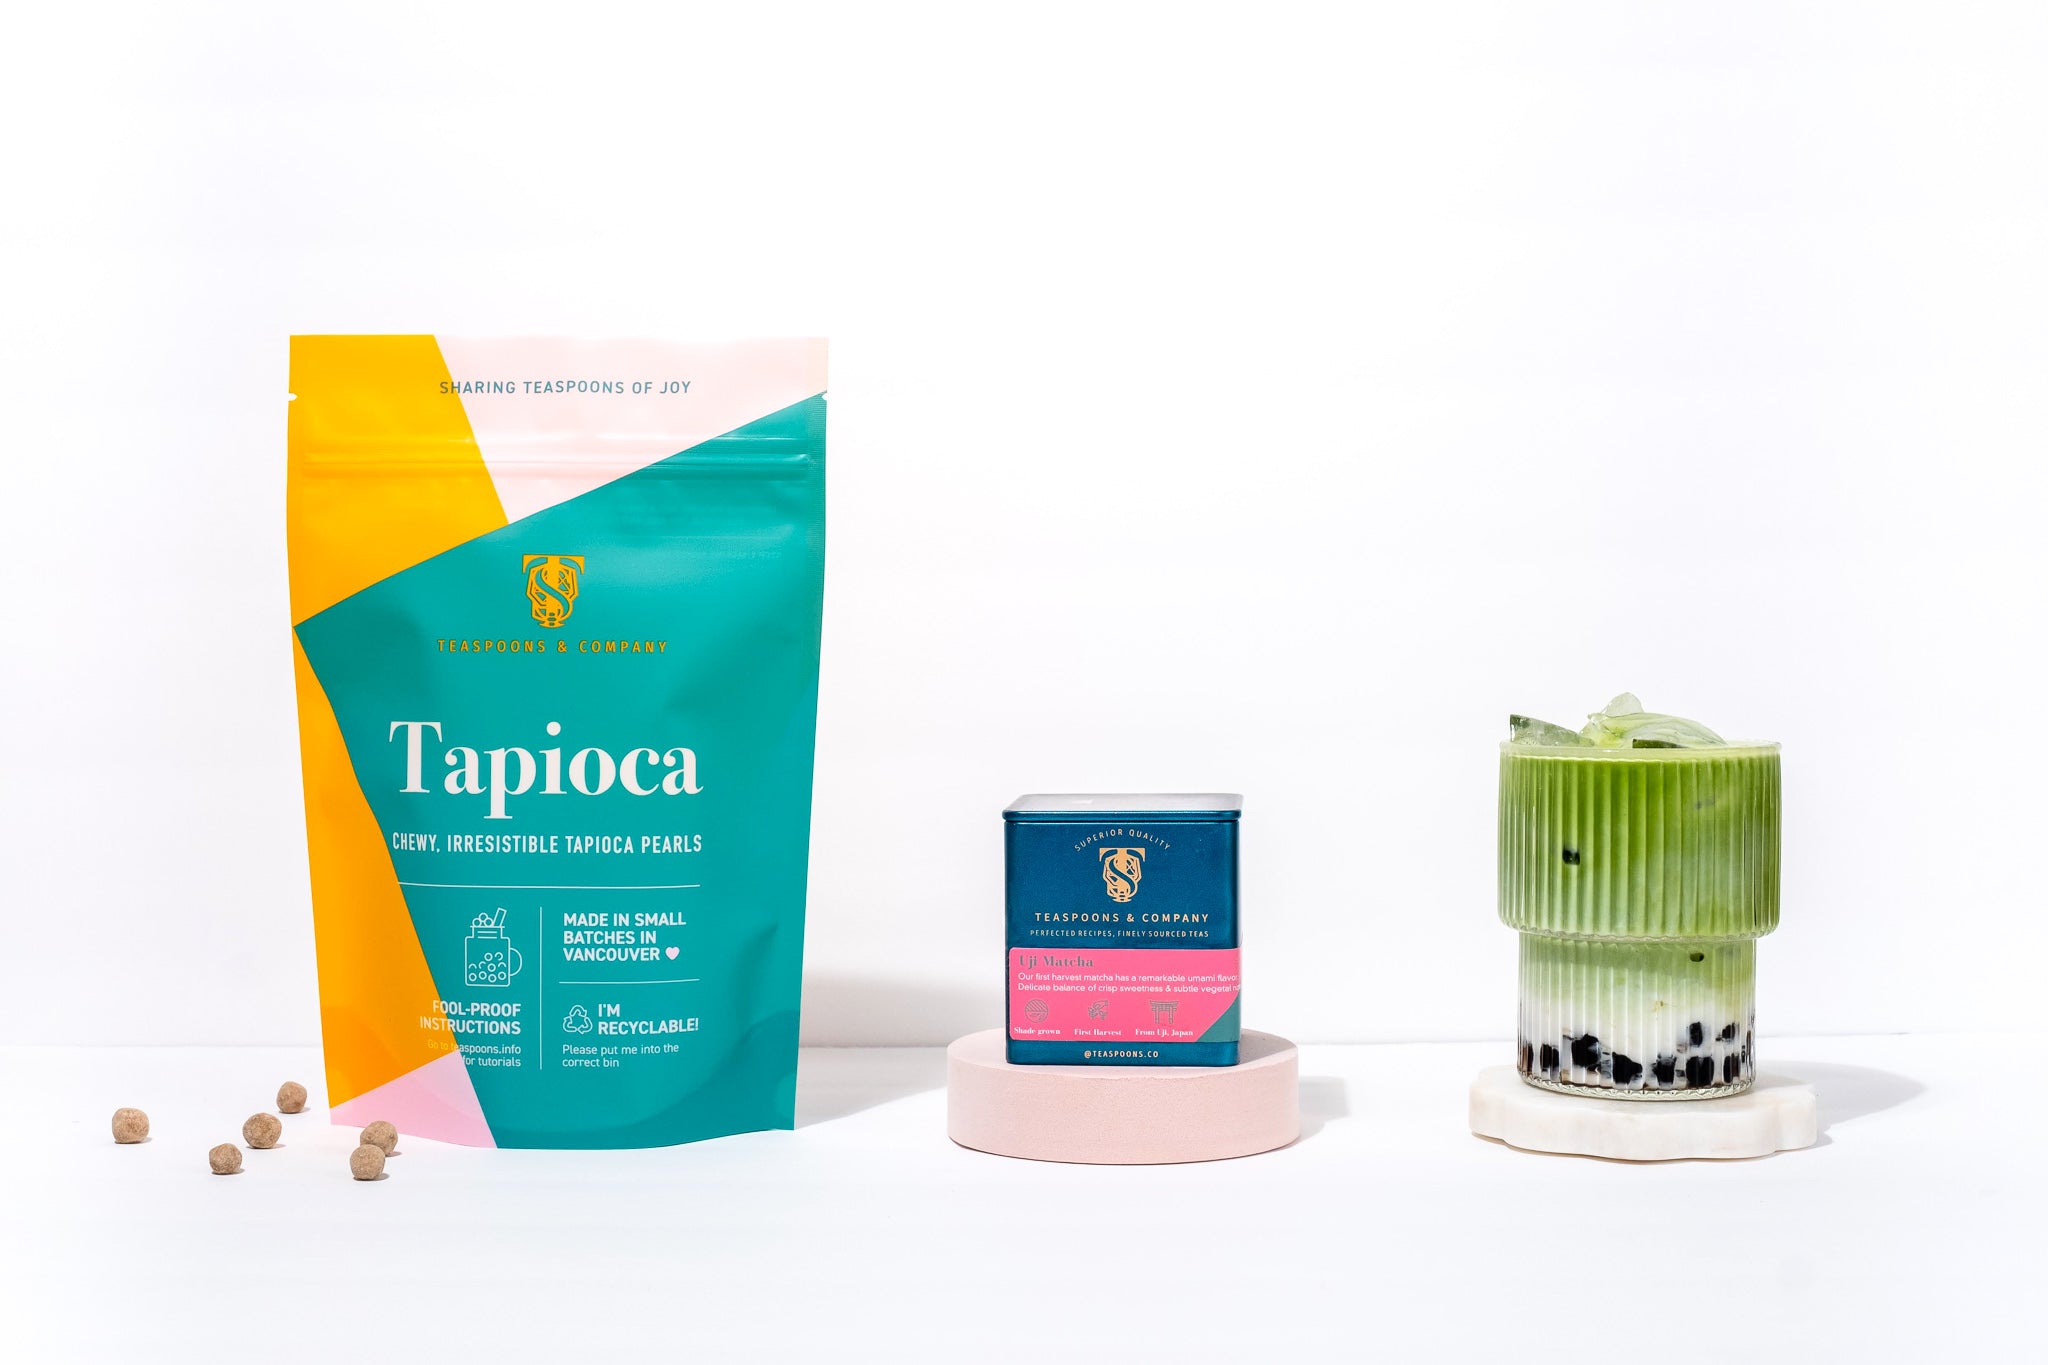 Build your own Bubble Tea Kit (100s of flavour options!) – Boba Loco